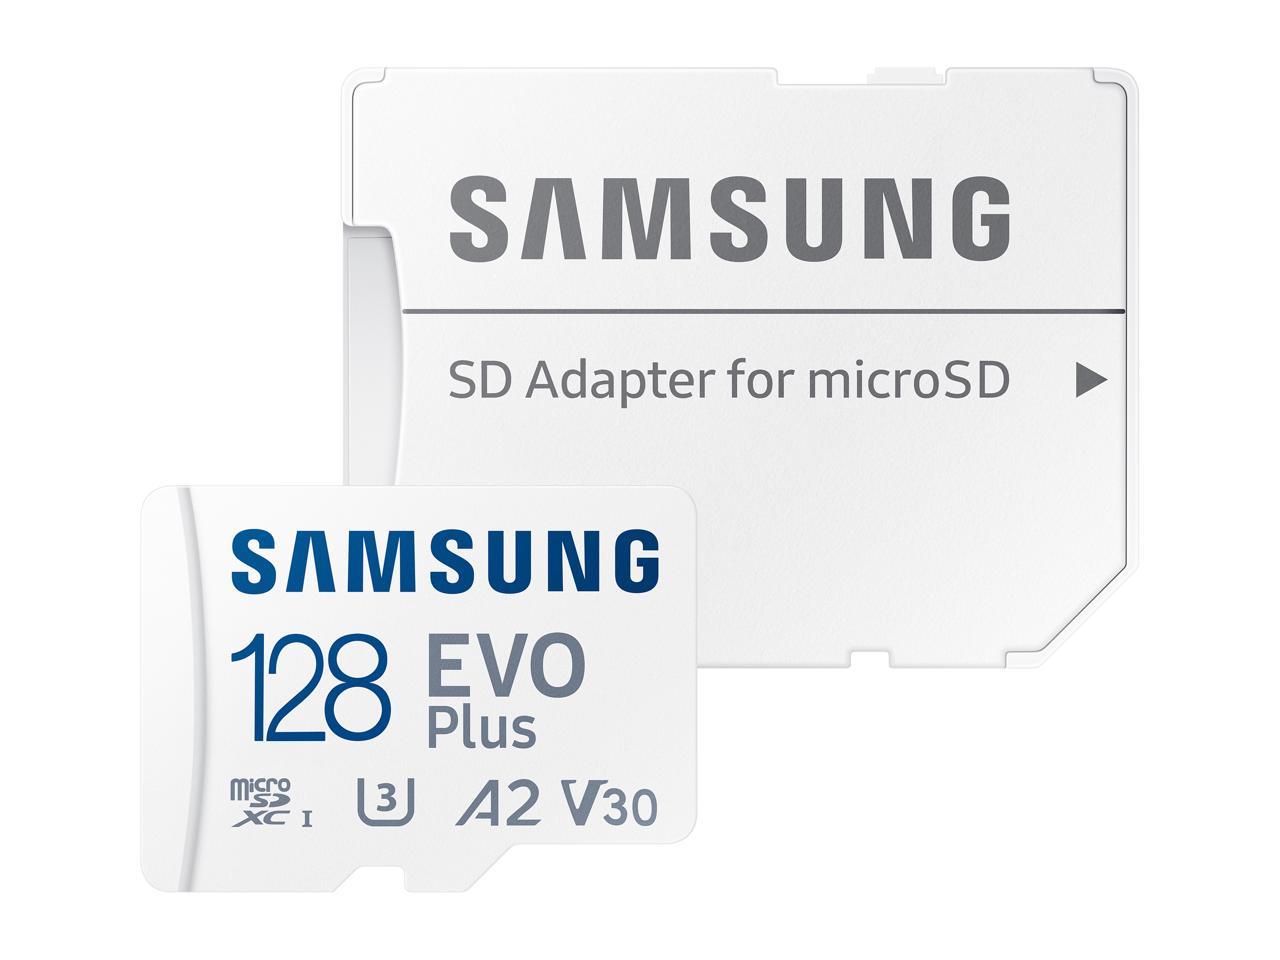 SAMSUNG EVO Plus 128GB microSDXC Flash Card w/ Adapter $14 at Newegg